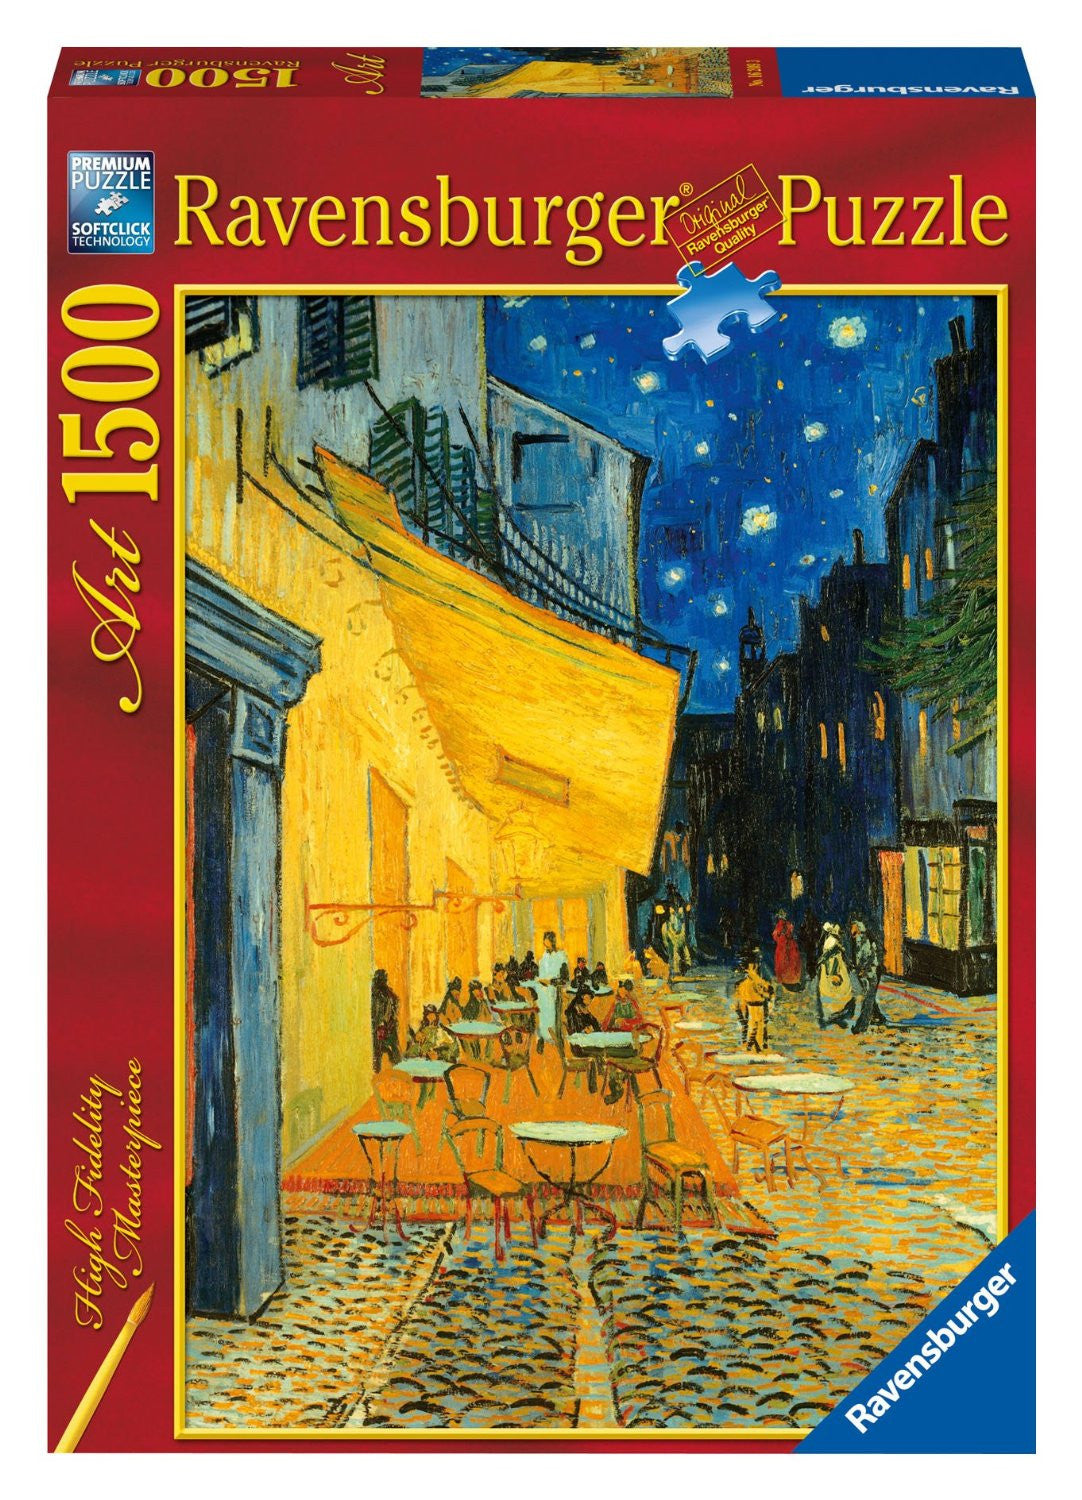 Ravensburger Adult Puzzles 1500 pc Puzzles - Van Gogh: Café Terrace at Night 16209